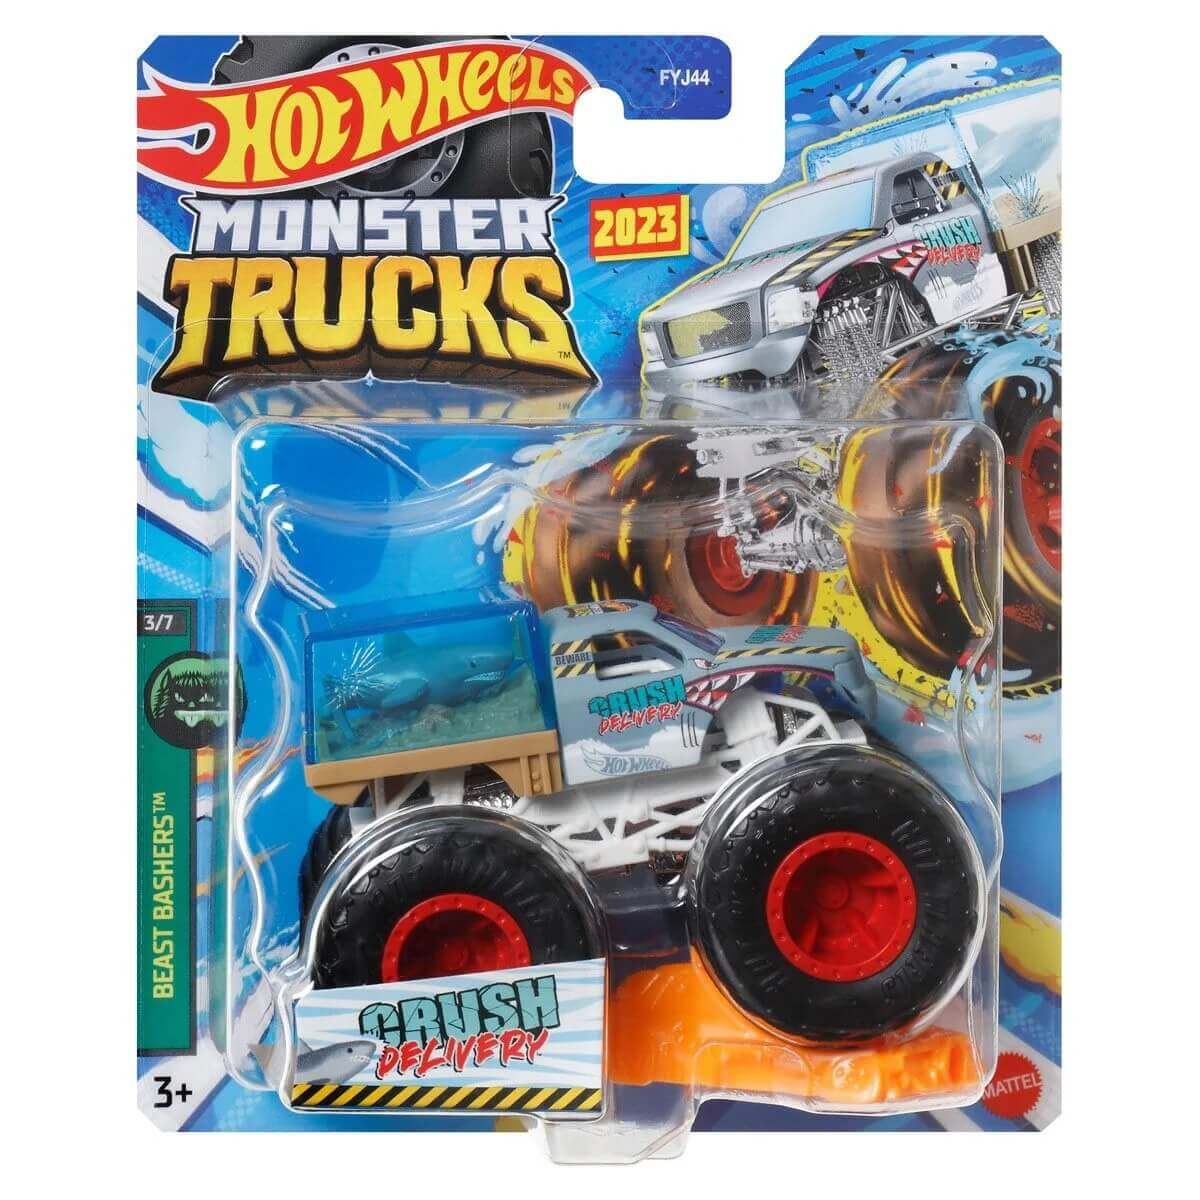 MEGA Construx Hot Wheels Bigfoot Collectible Monster Truck